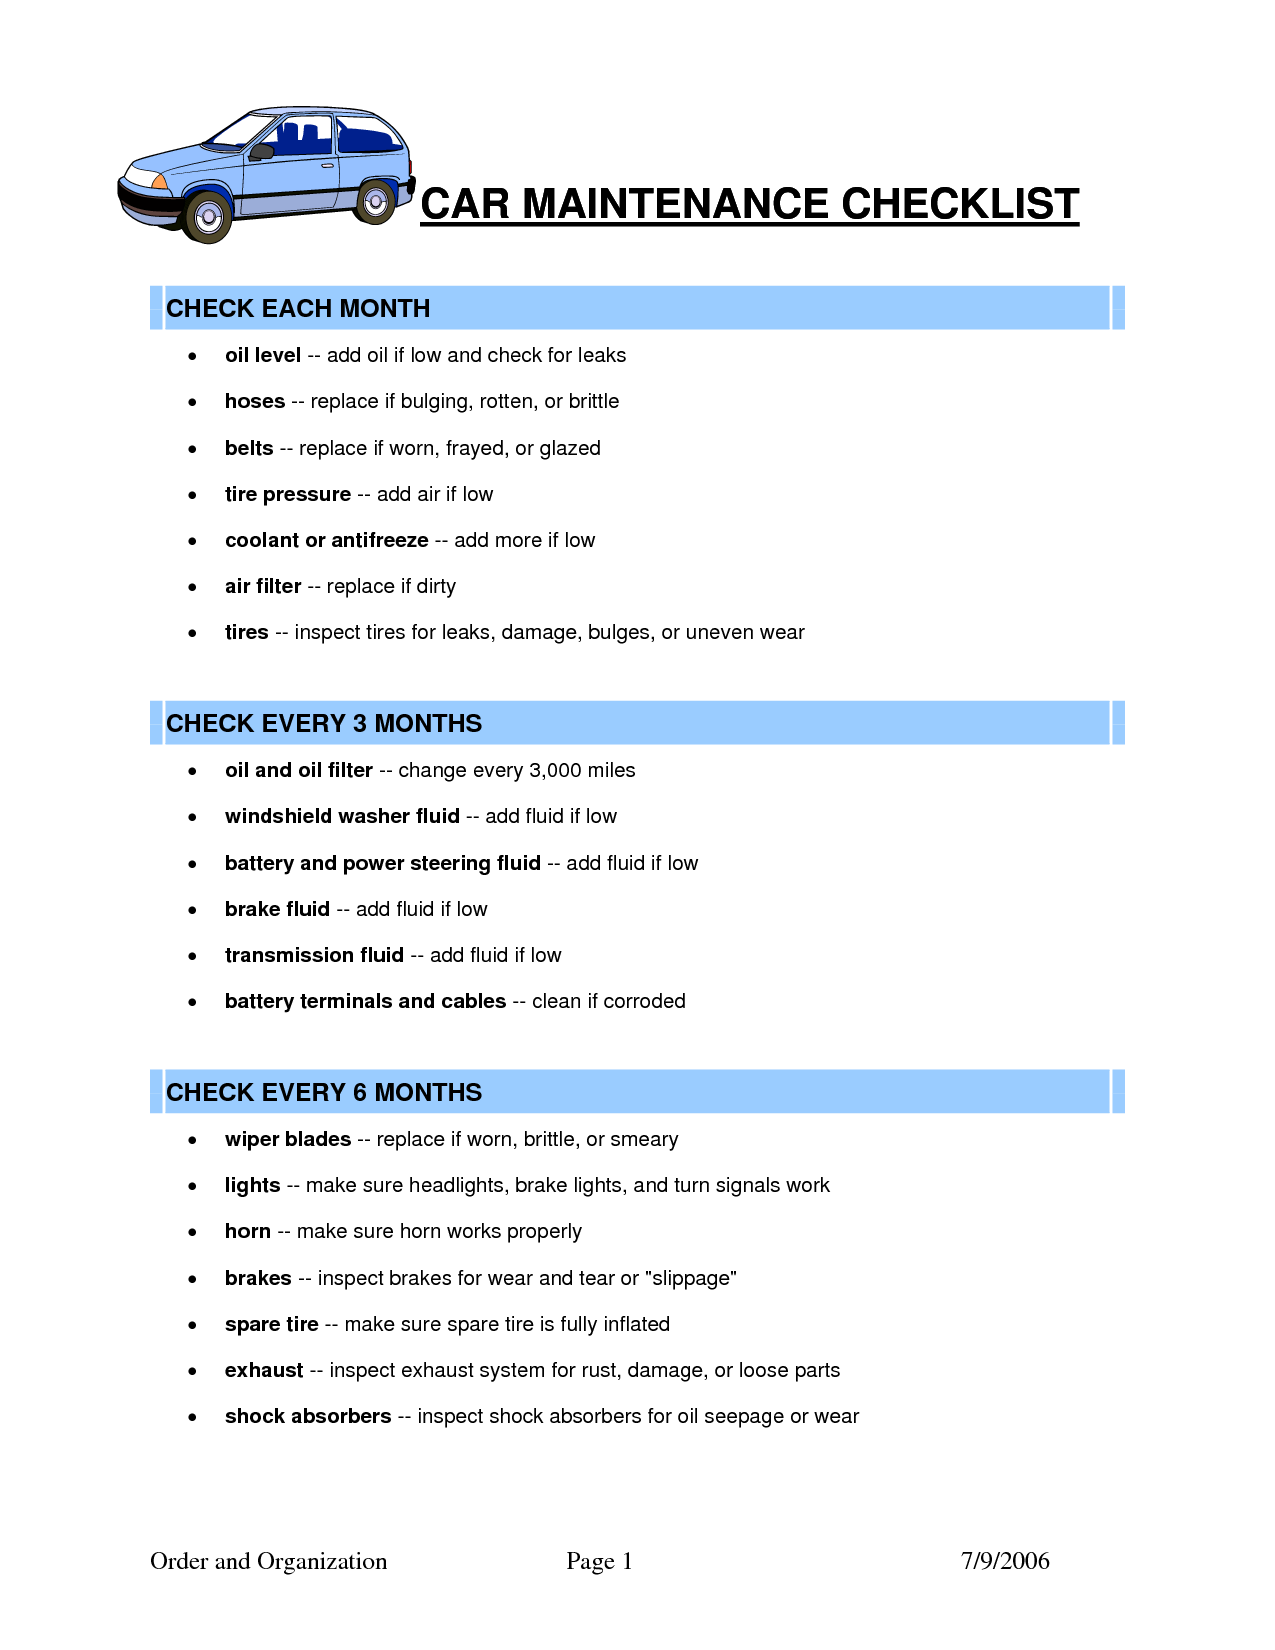 Vorlage Fur Die Checkliste Fur Die Fahrzeugwartung Checkliste Die Fahrzeugwartung Fur Car Maintenance Car Care Car Care Checklist